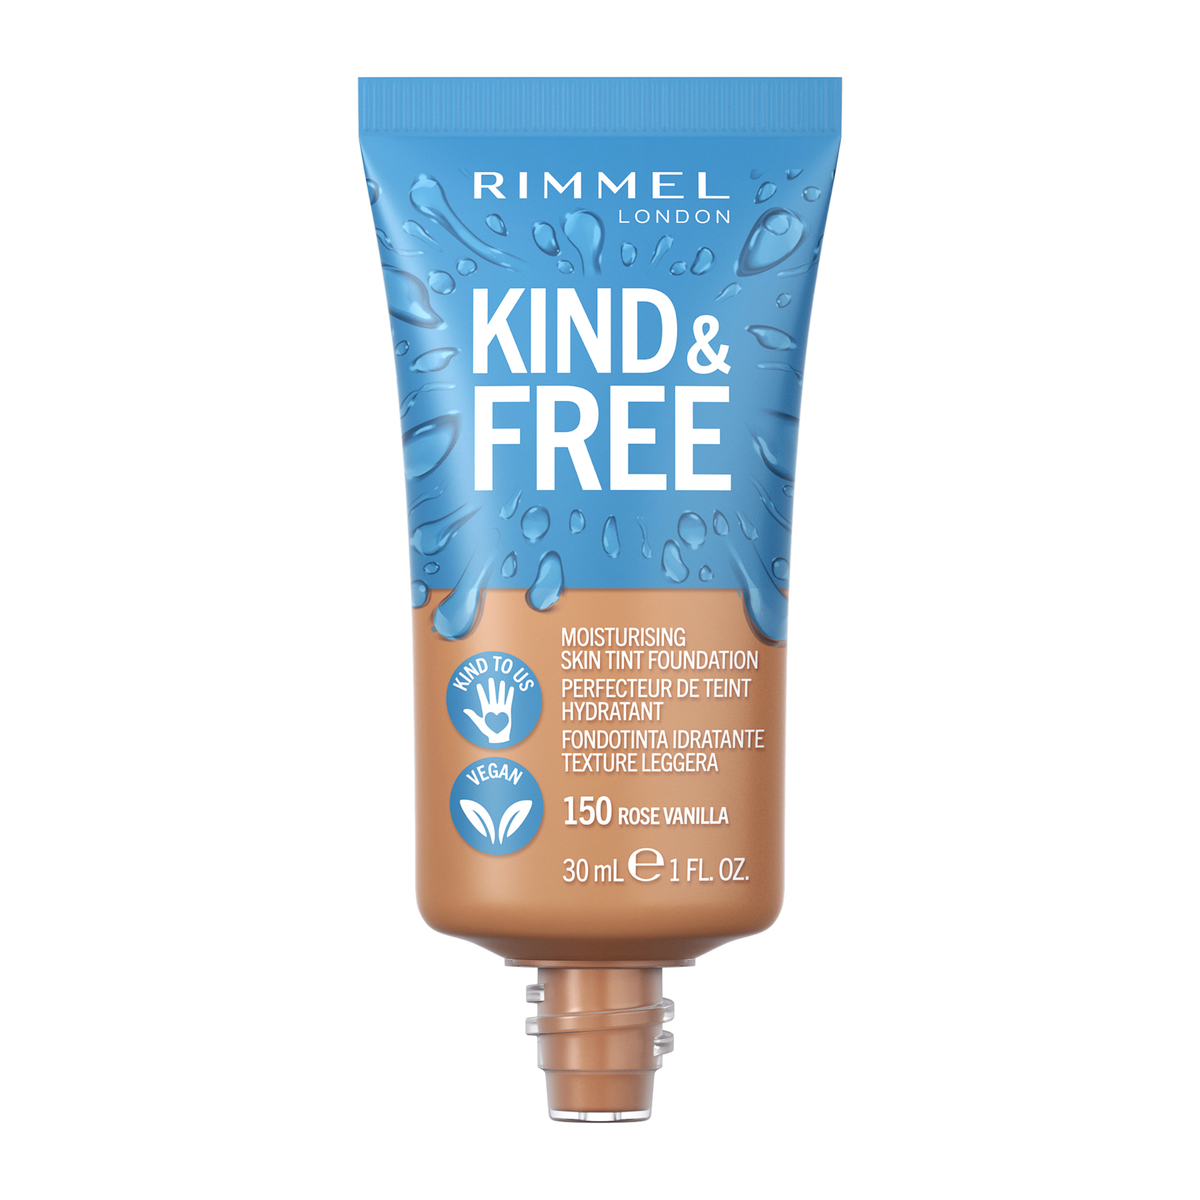 Rimmel London Kind & Free Moisturising Foundation, 150 Rose Vanilla, 30 ml